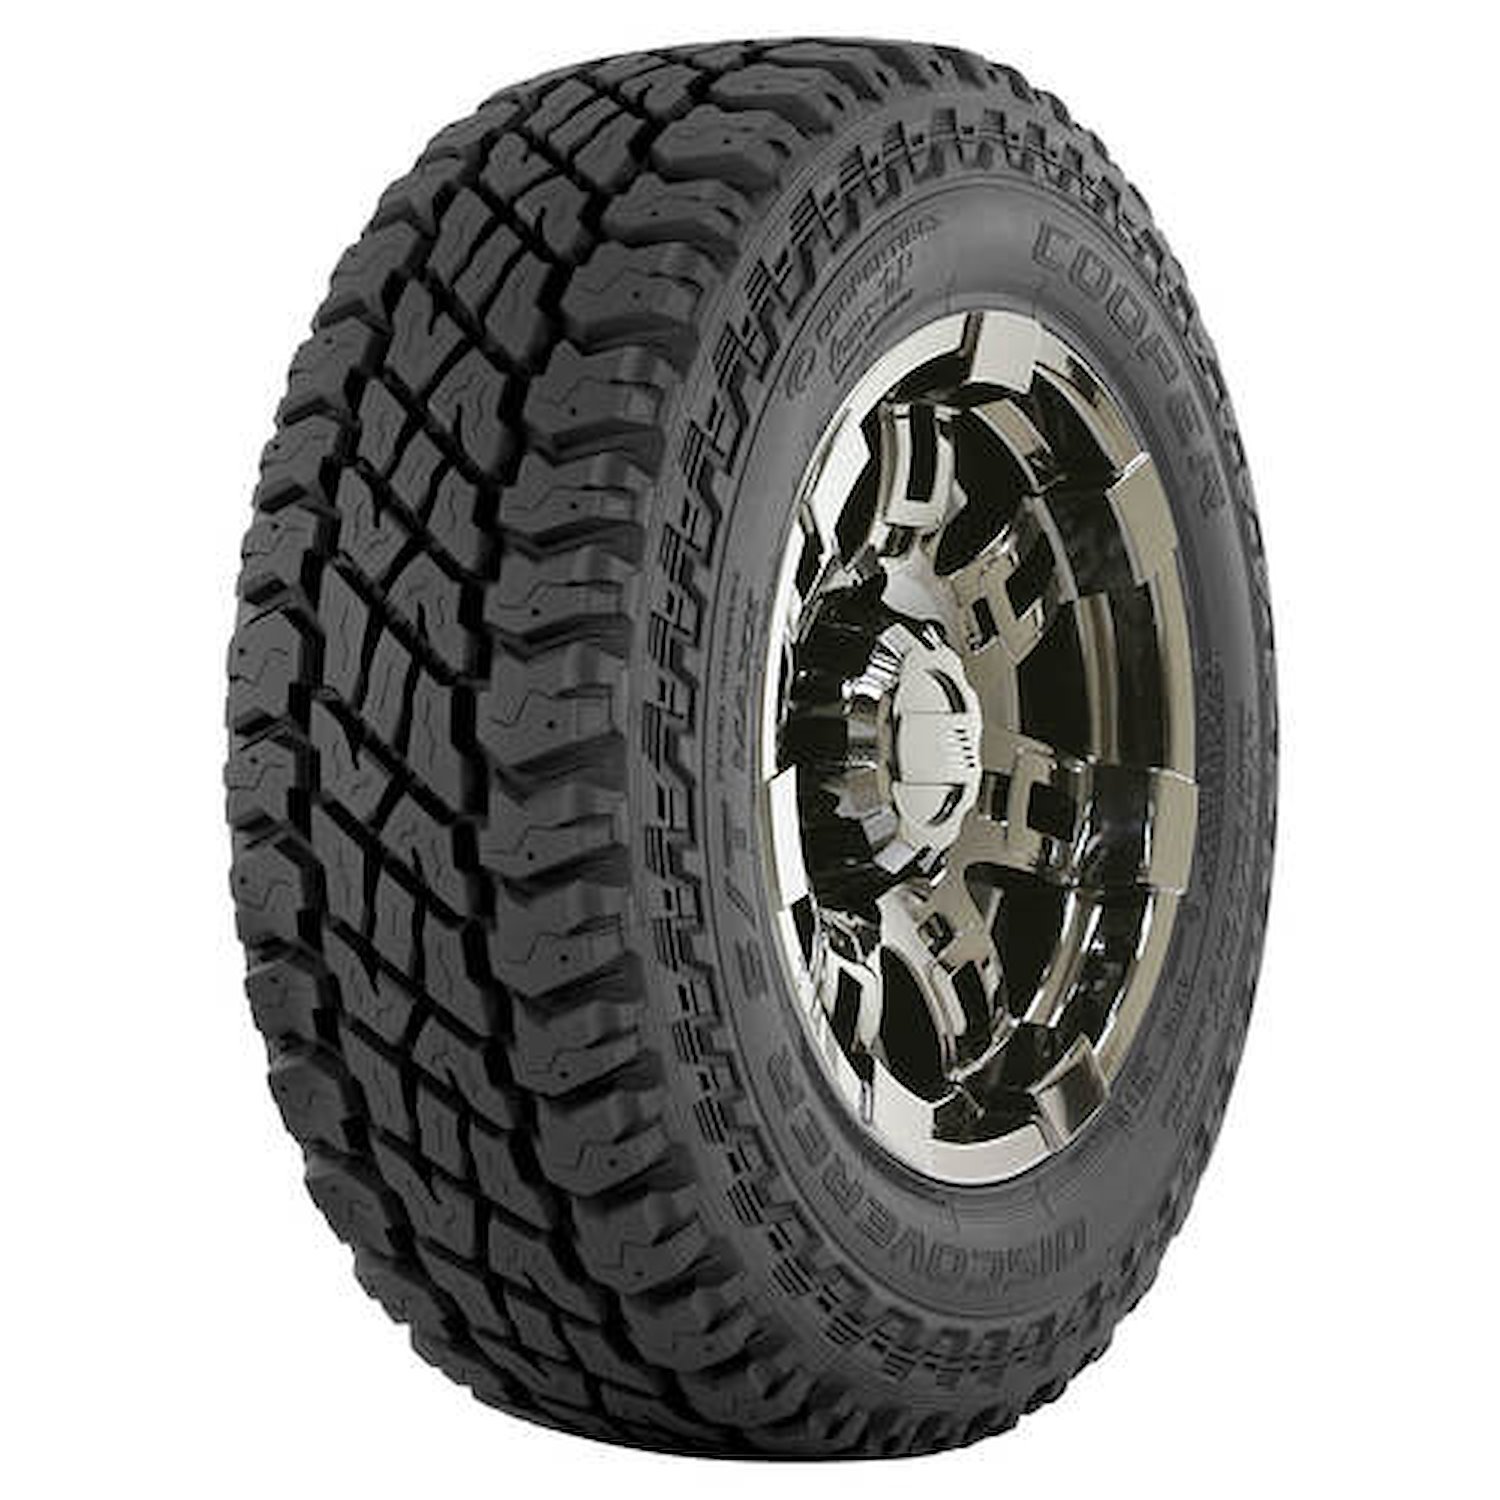 Discoverer S/T Maxx All-Terrain Tire, LT245/75R17